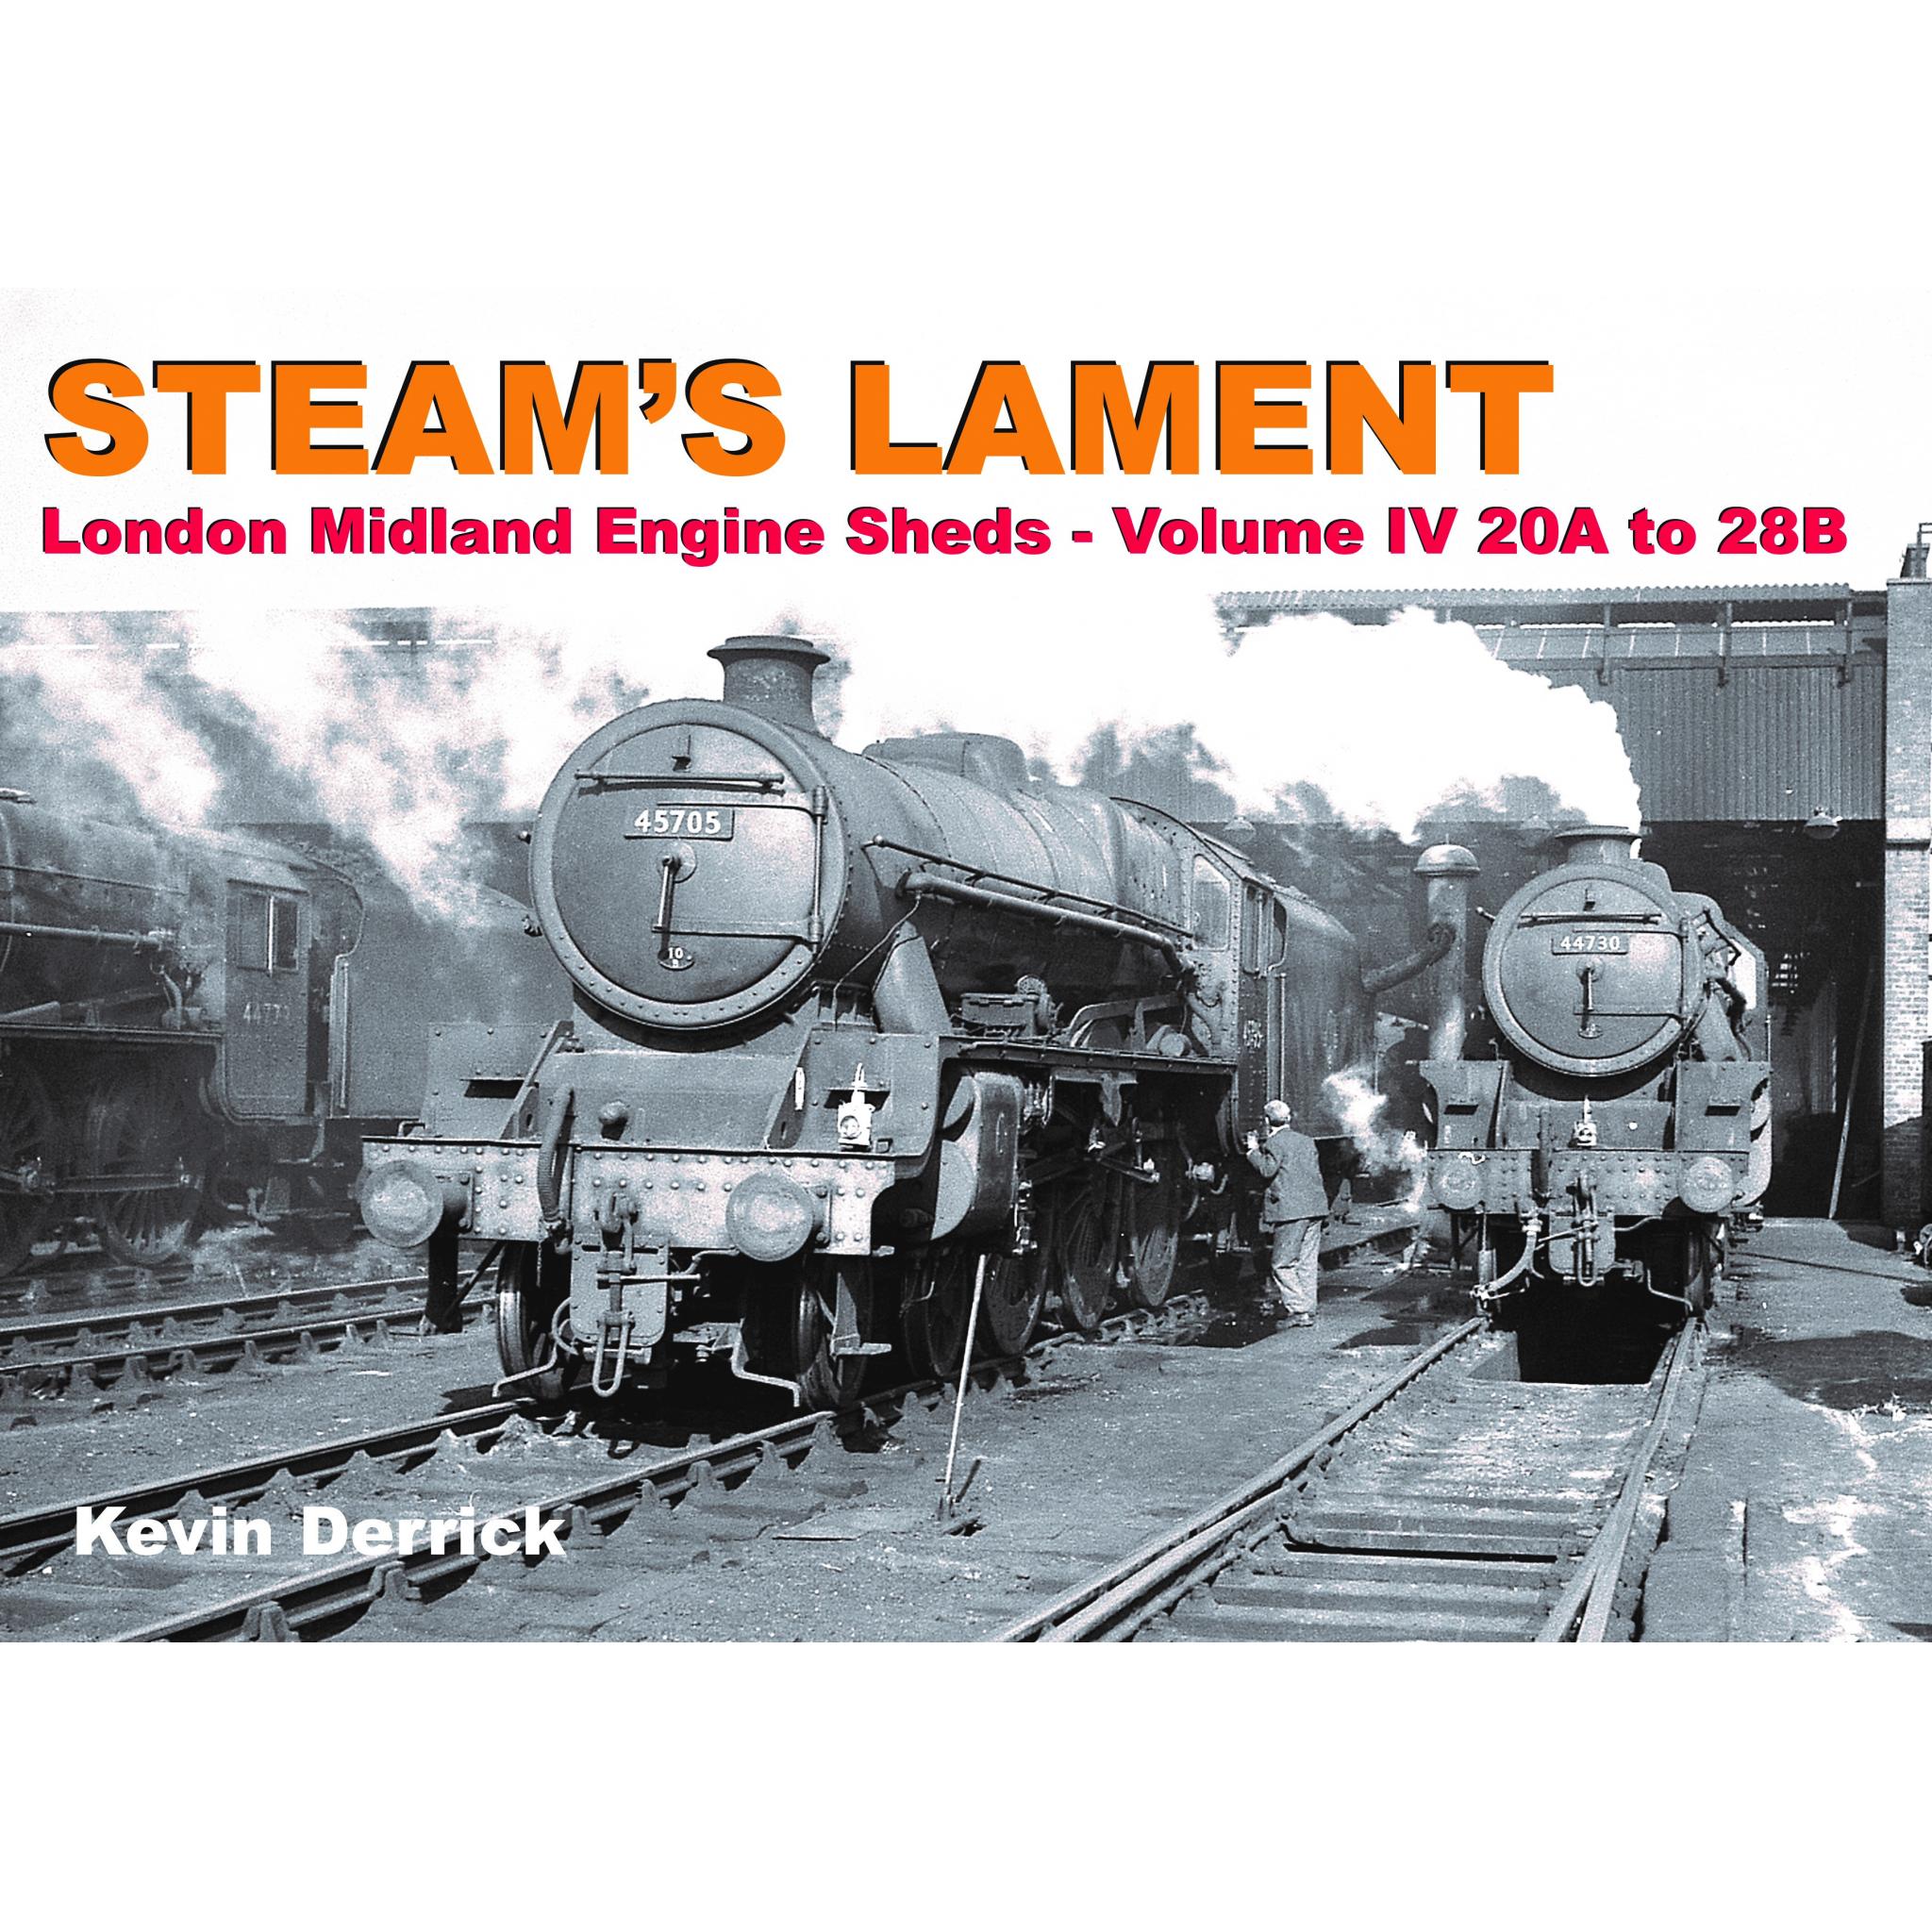 STEAM'S LAMENT London Midland Region Engine Sheds IV 20A to 28B